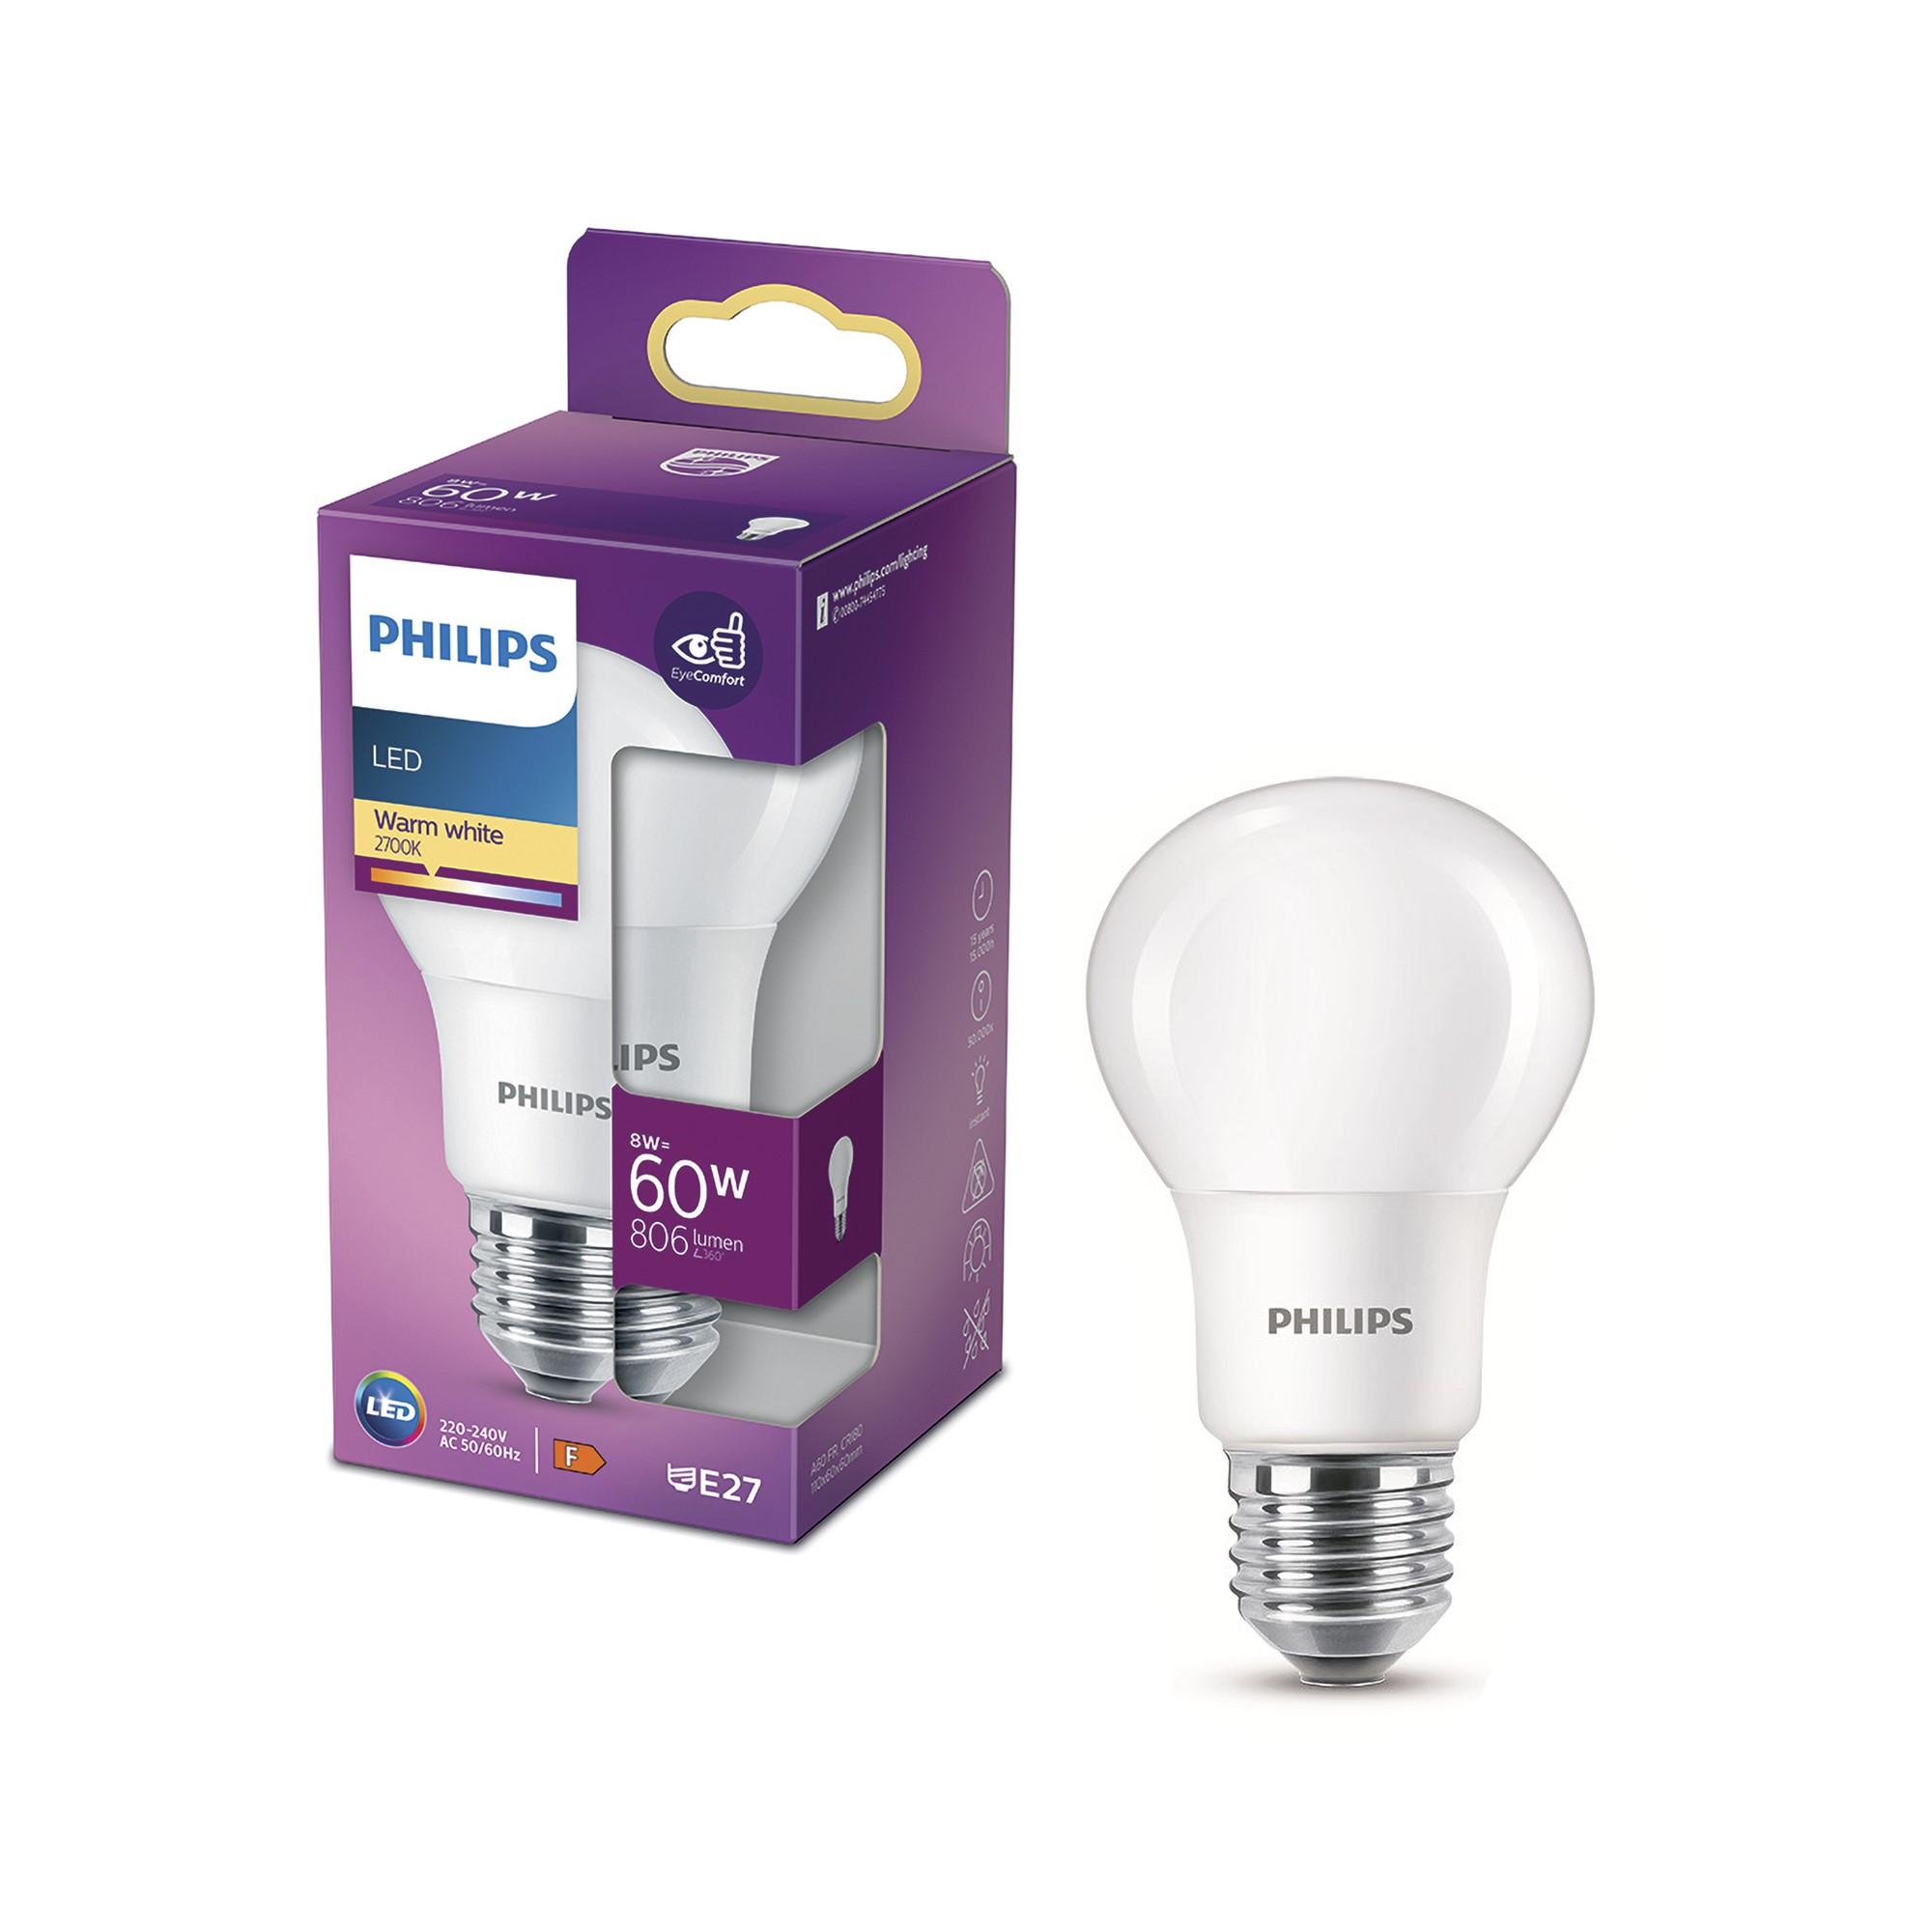 PHILIPS LI Frosted LED Light Bulb - E27, Warm White